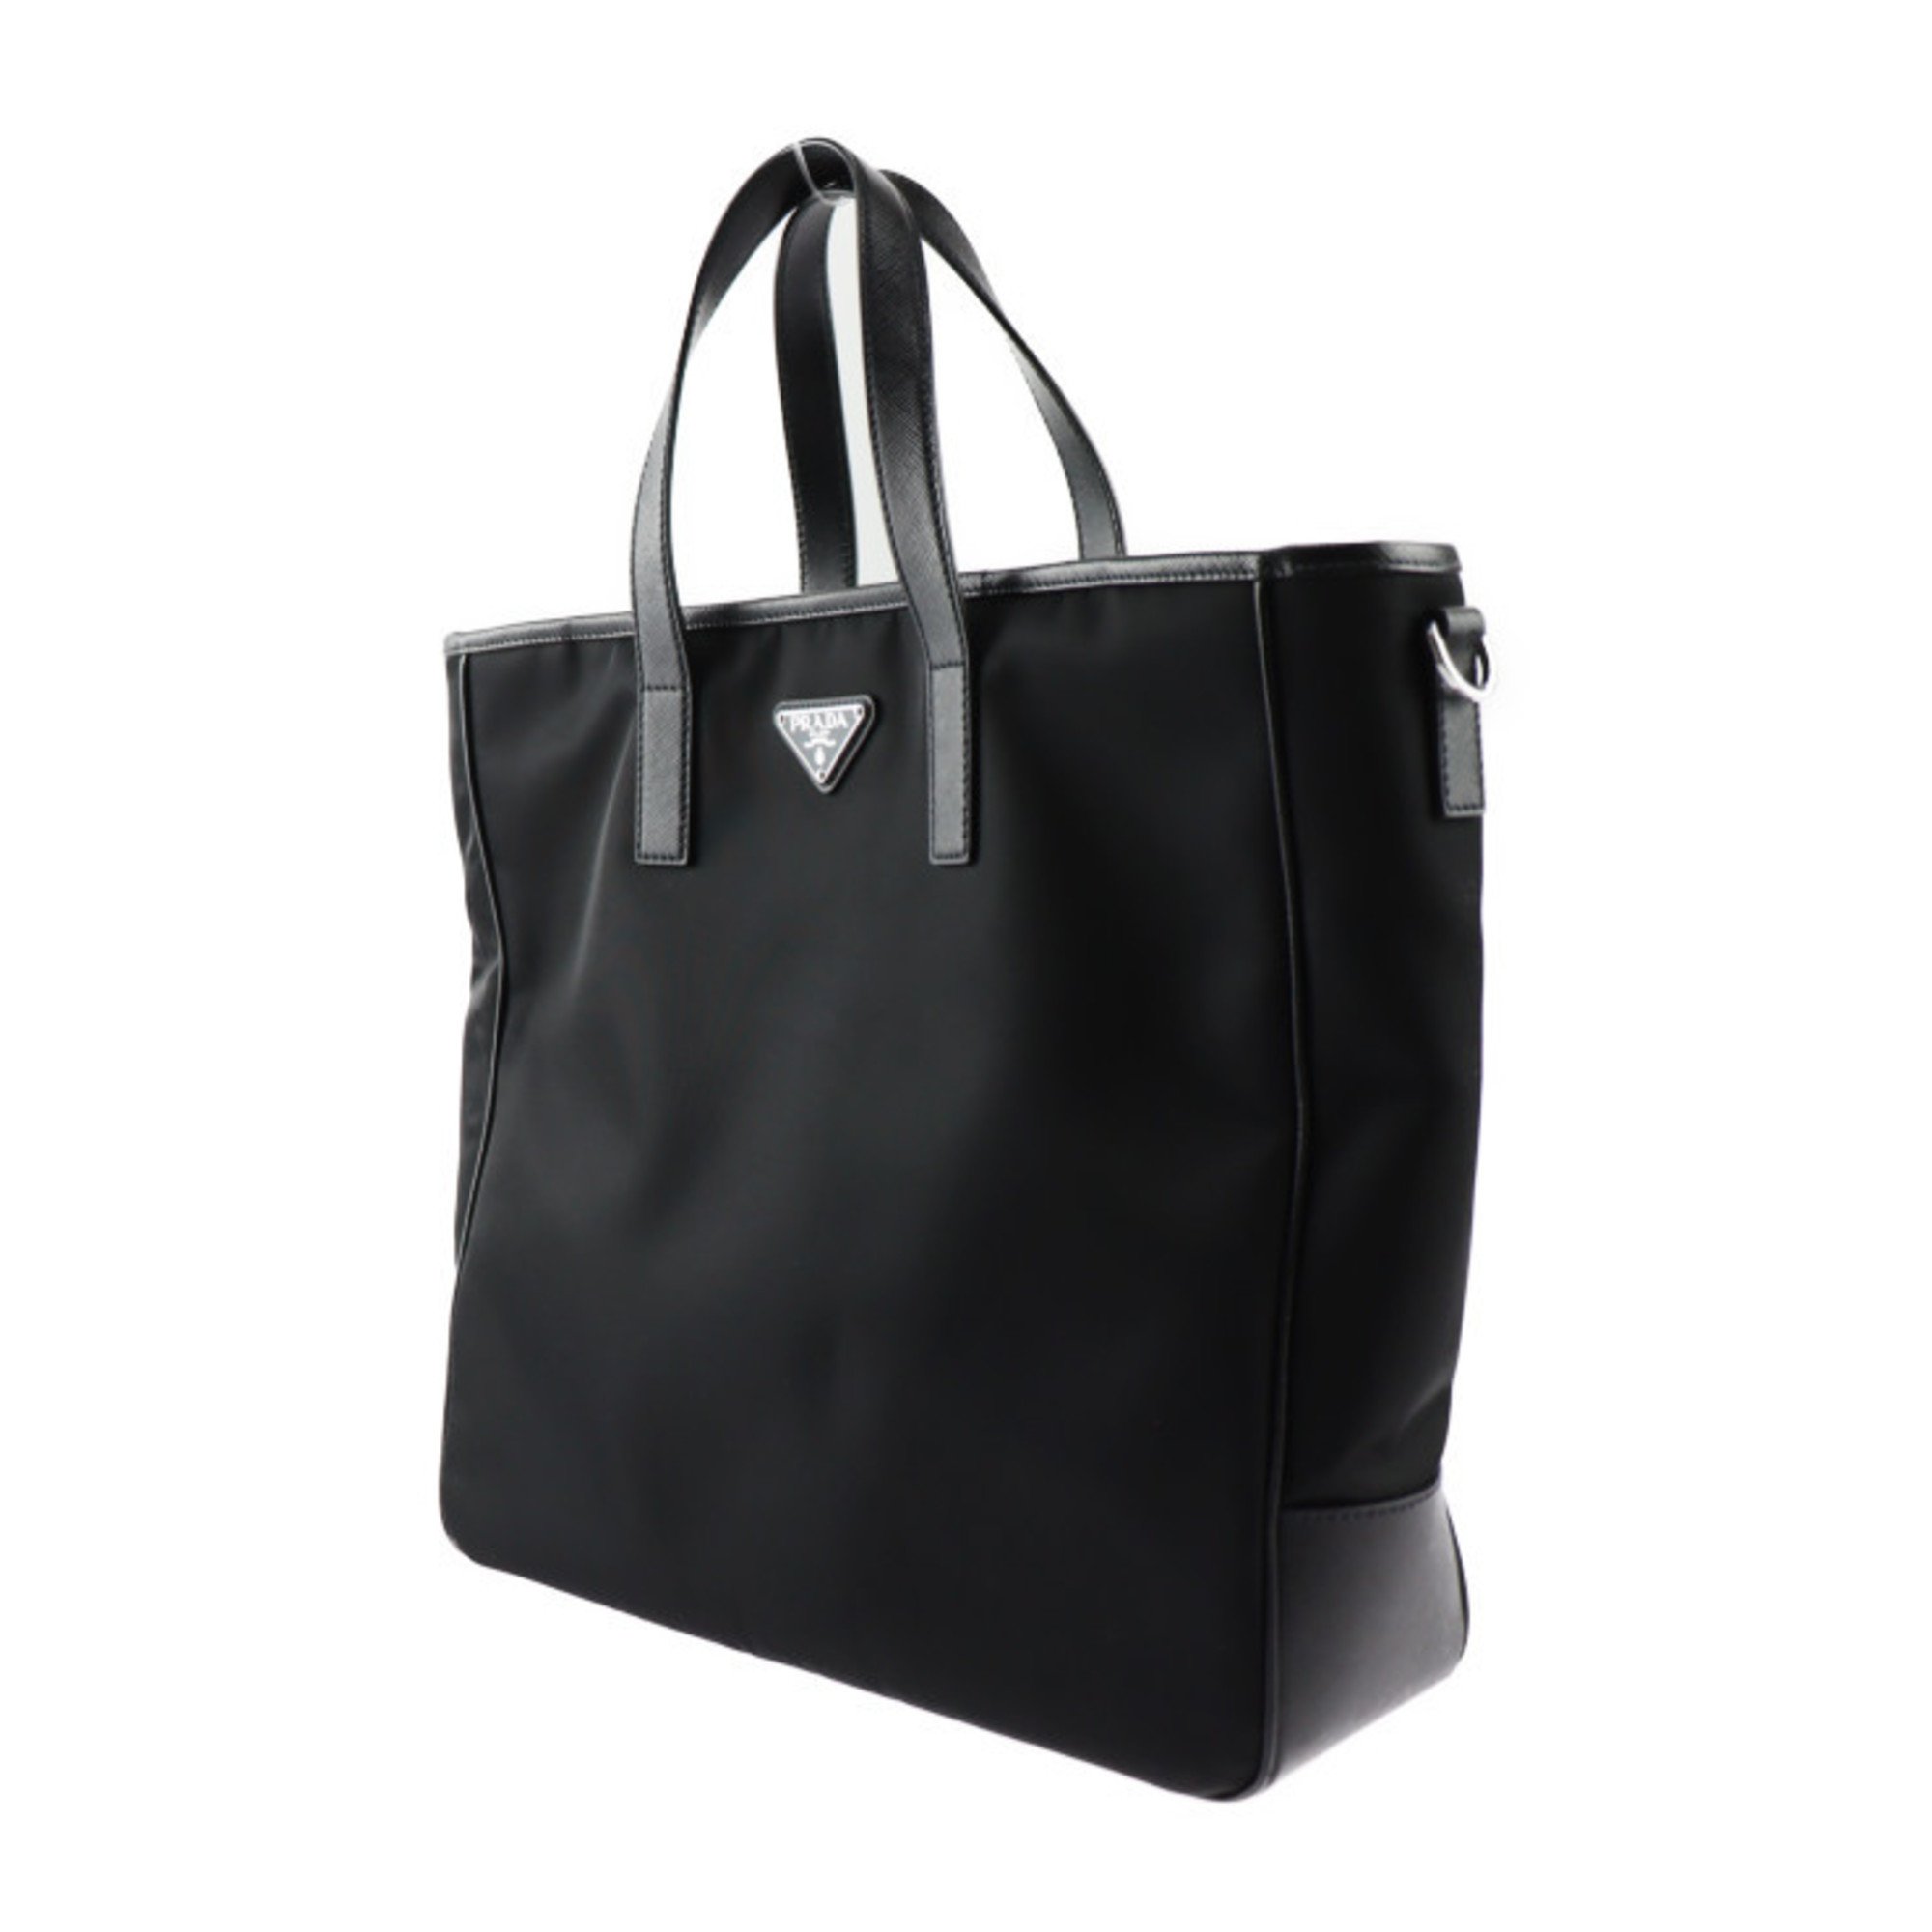 PRADA Prada tote bag 2VG064 nylon leather black silver hardware 2WAY shoulder triangle logo